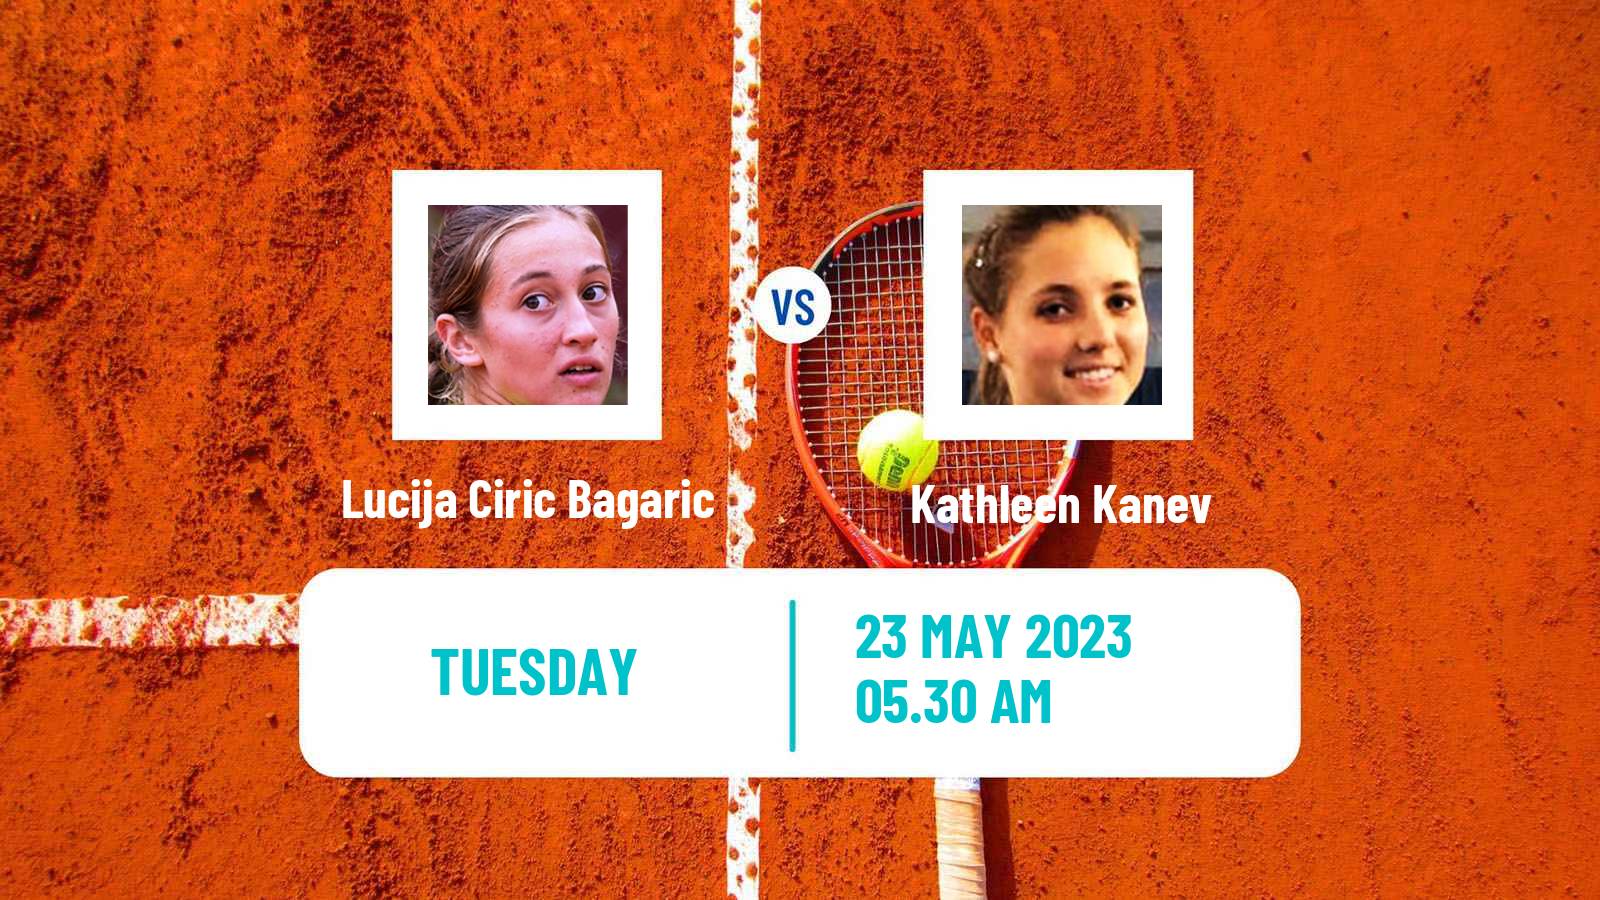 Tennis ITF W25 Warmbad Villach Women Lucija Ciric Bagaric - Kathleen Kanev